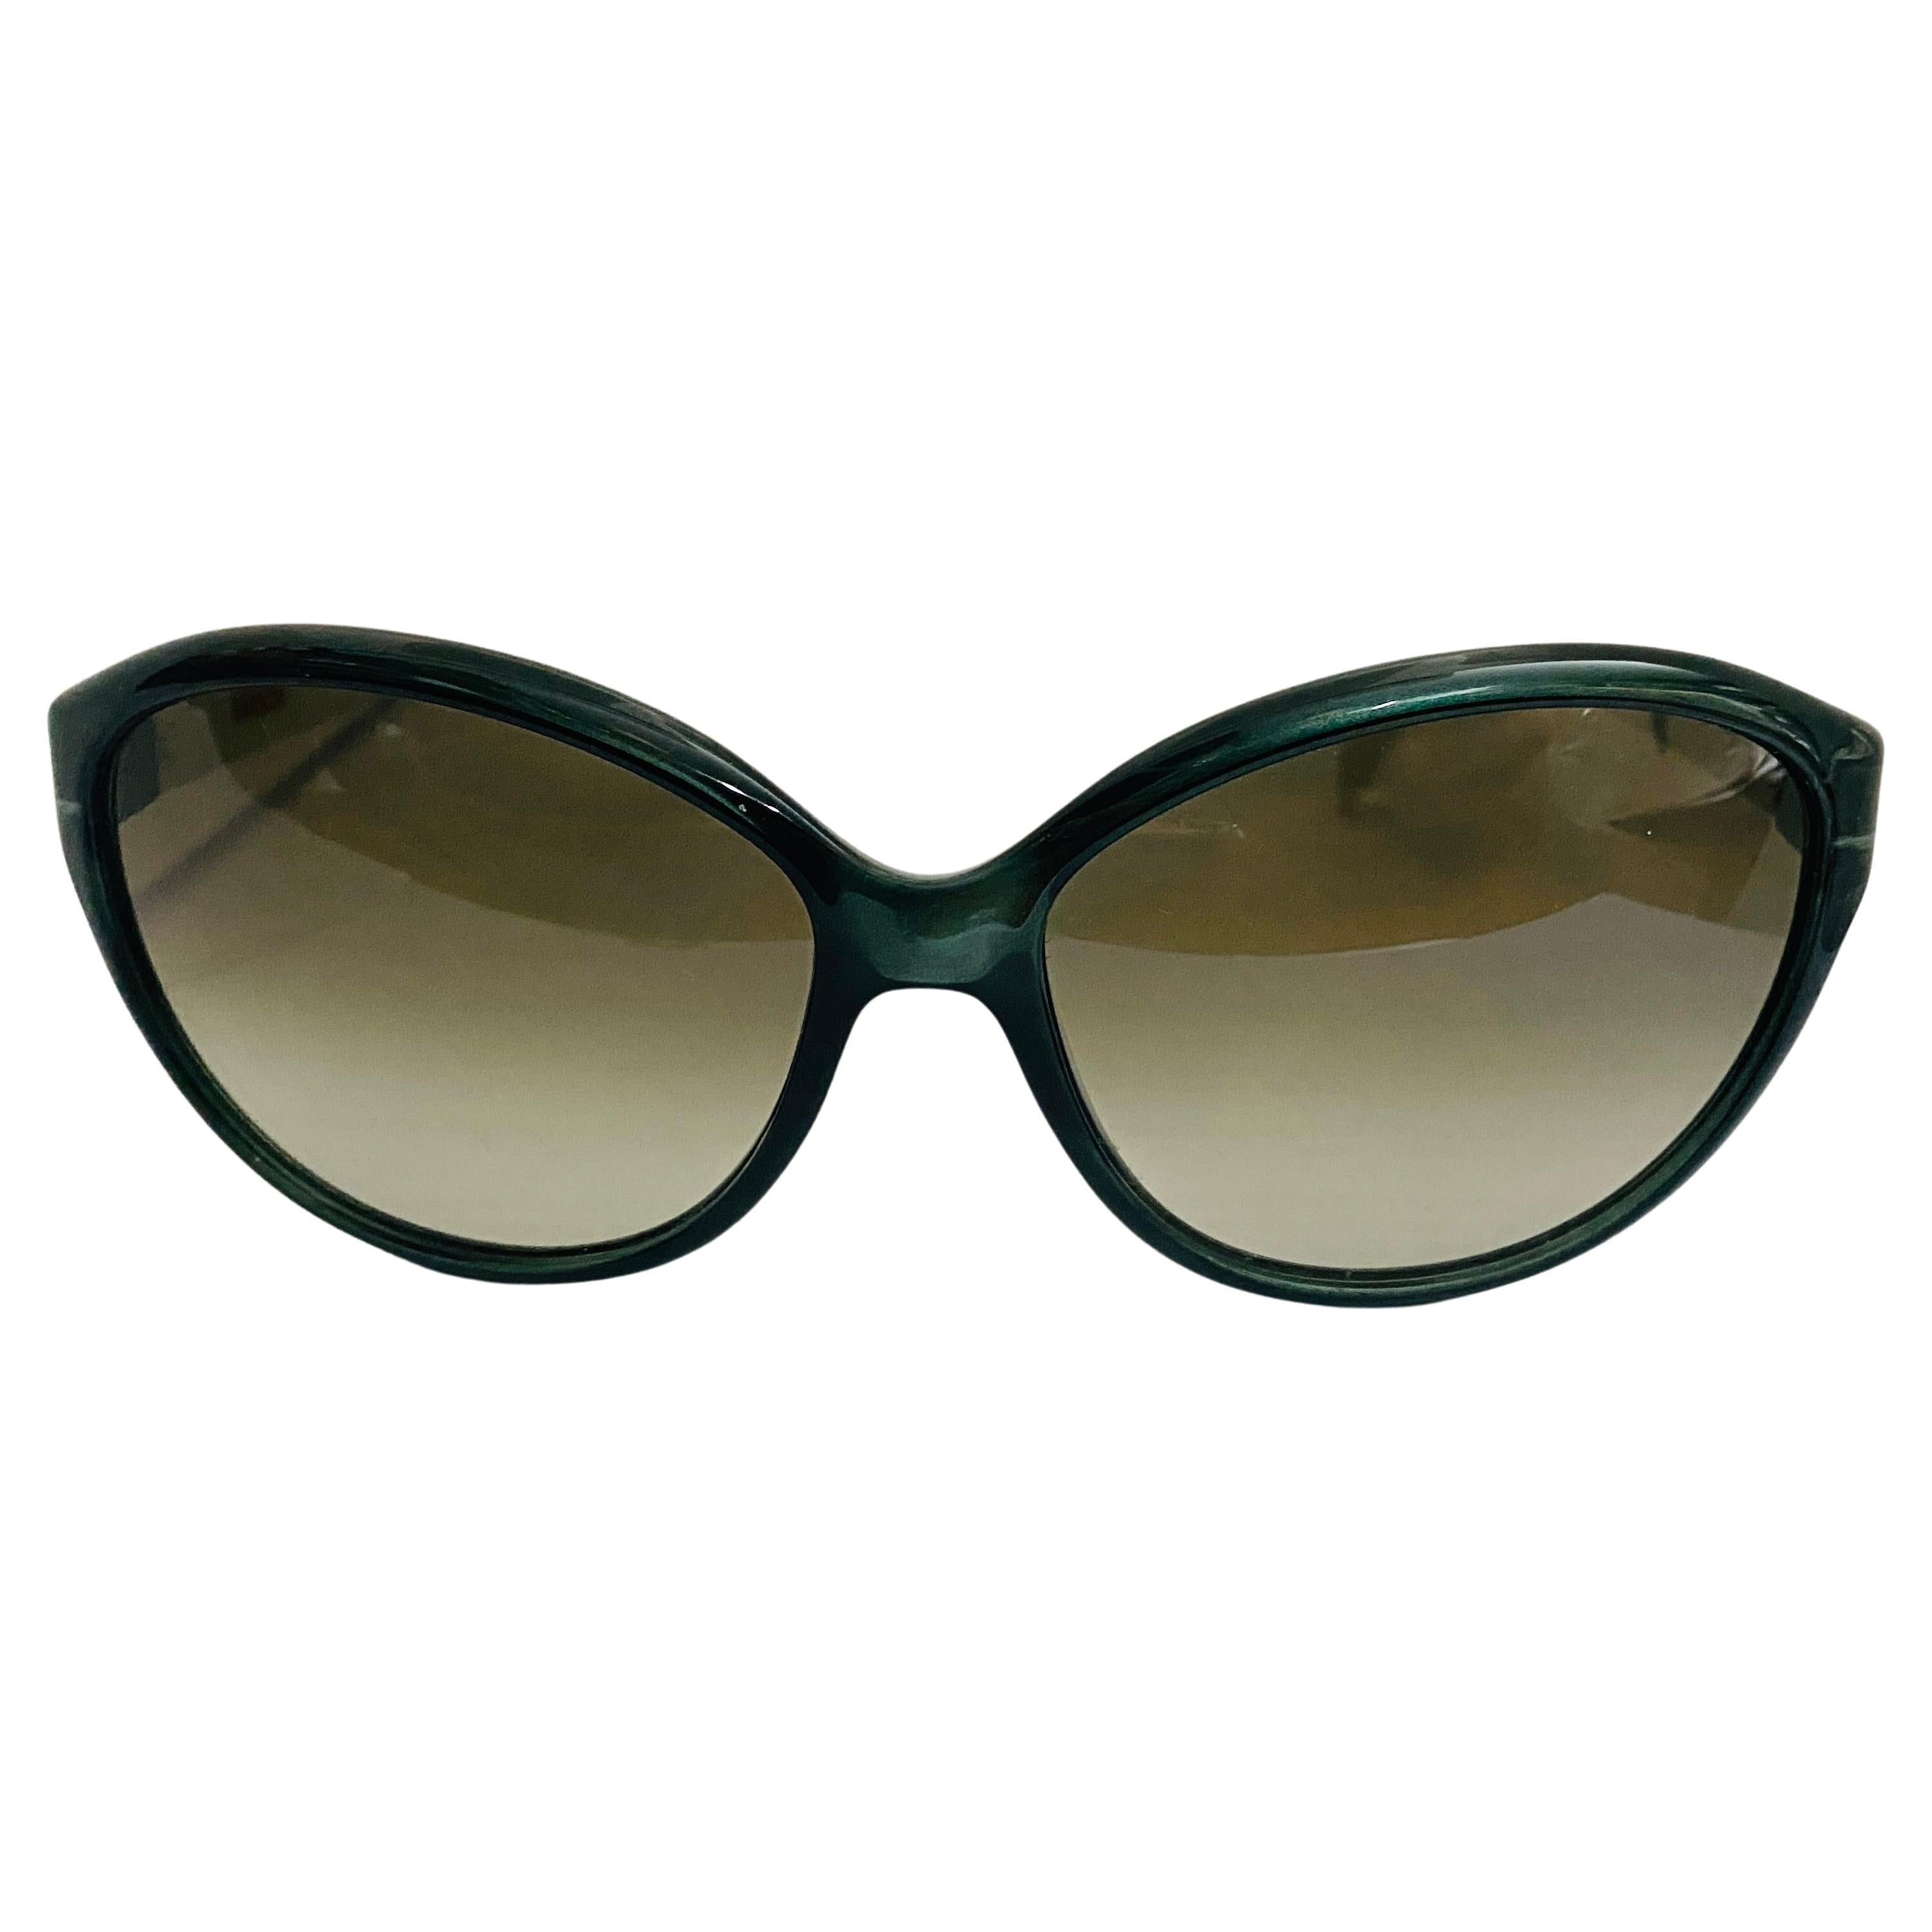 1990s Vintage Multicolor Oversized Sunglasses by Fendi